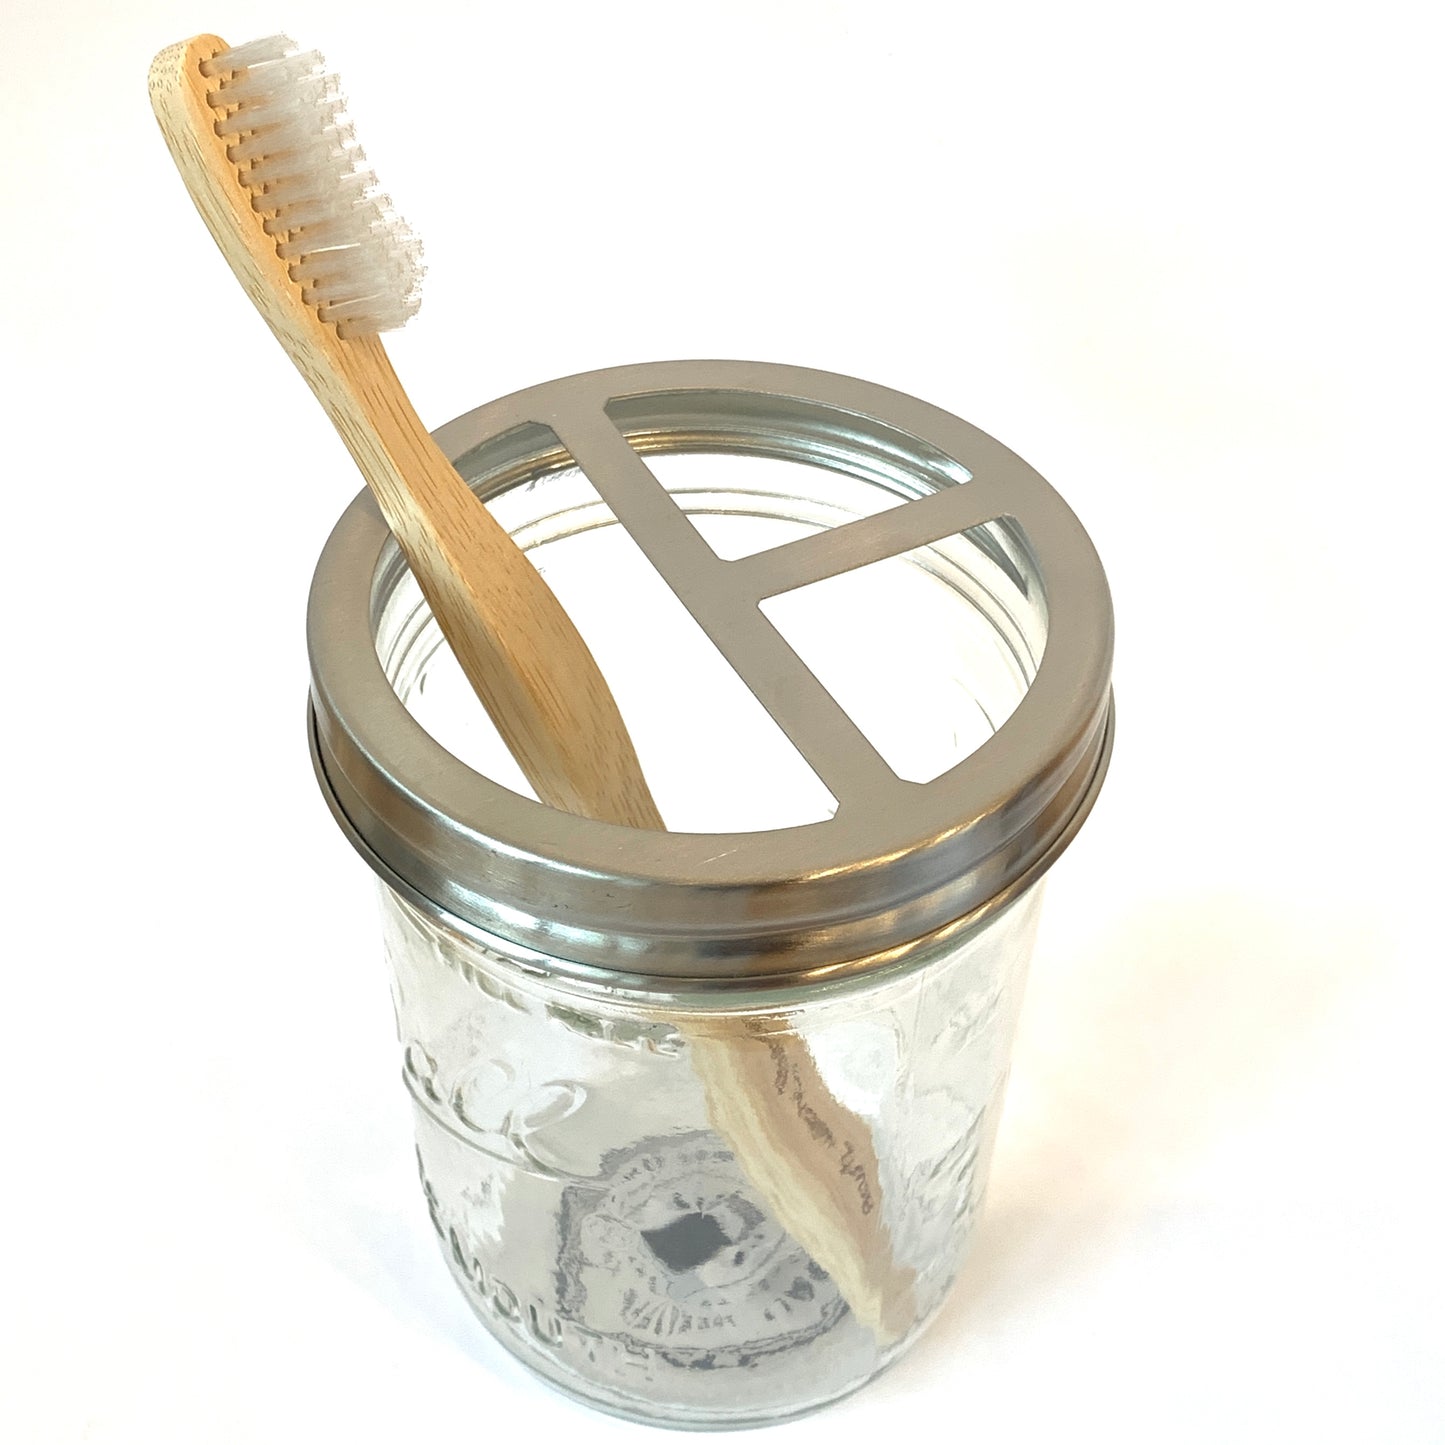 Mason Jar Toothbrush Holder - Stainless Steel